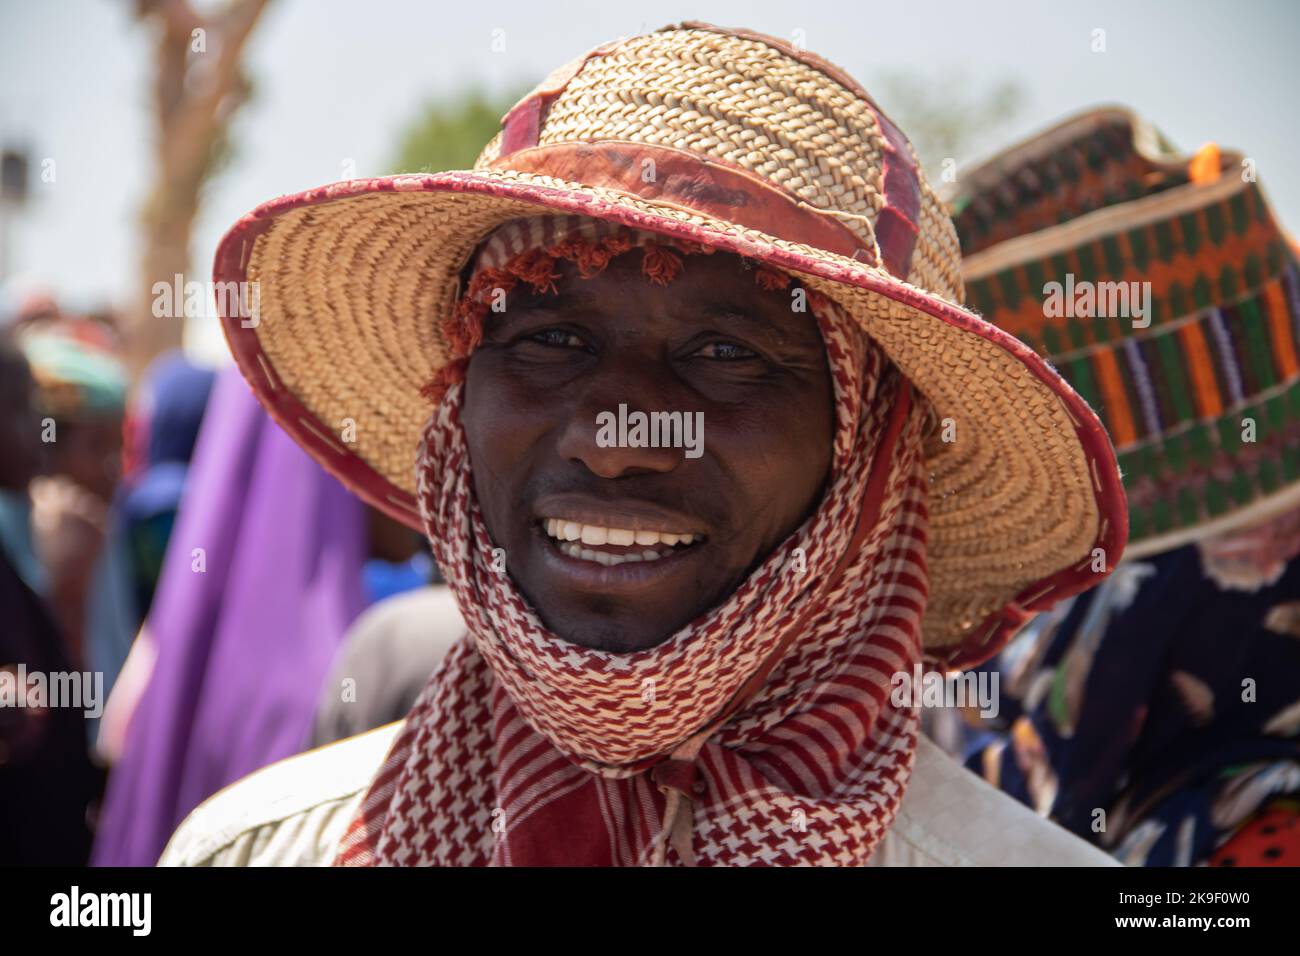 African tribes, Nigeria, Borno State, Maiduguri city. Fulani tribe traditionally dressed in colorful clothing Stock Photo